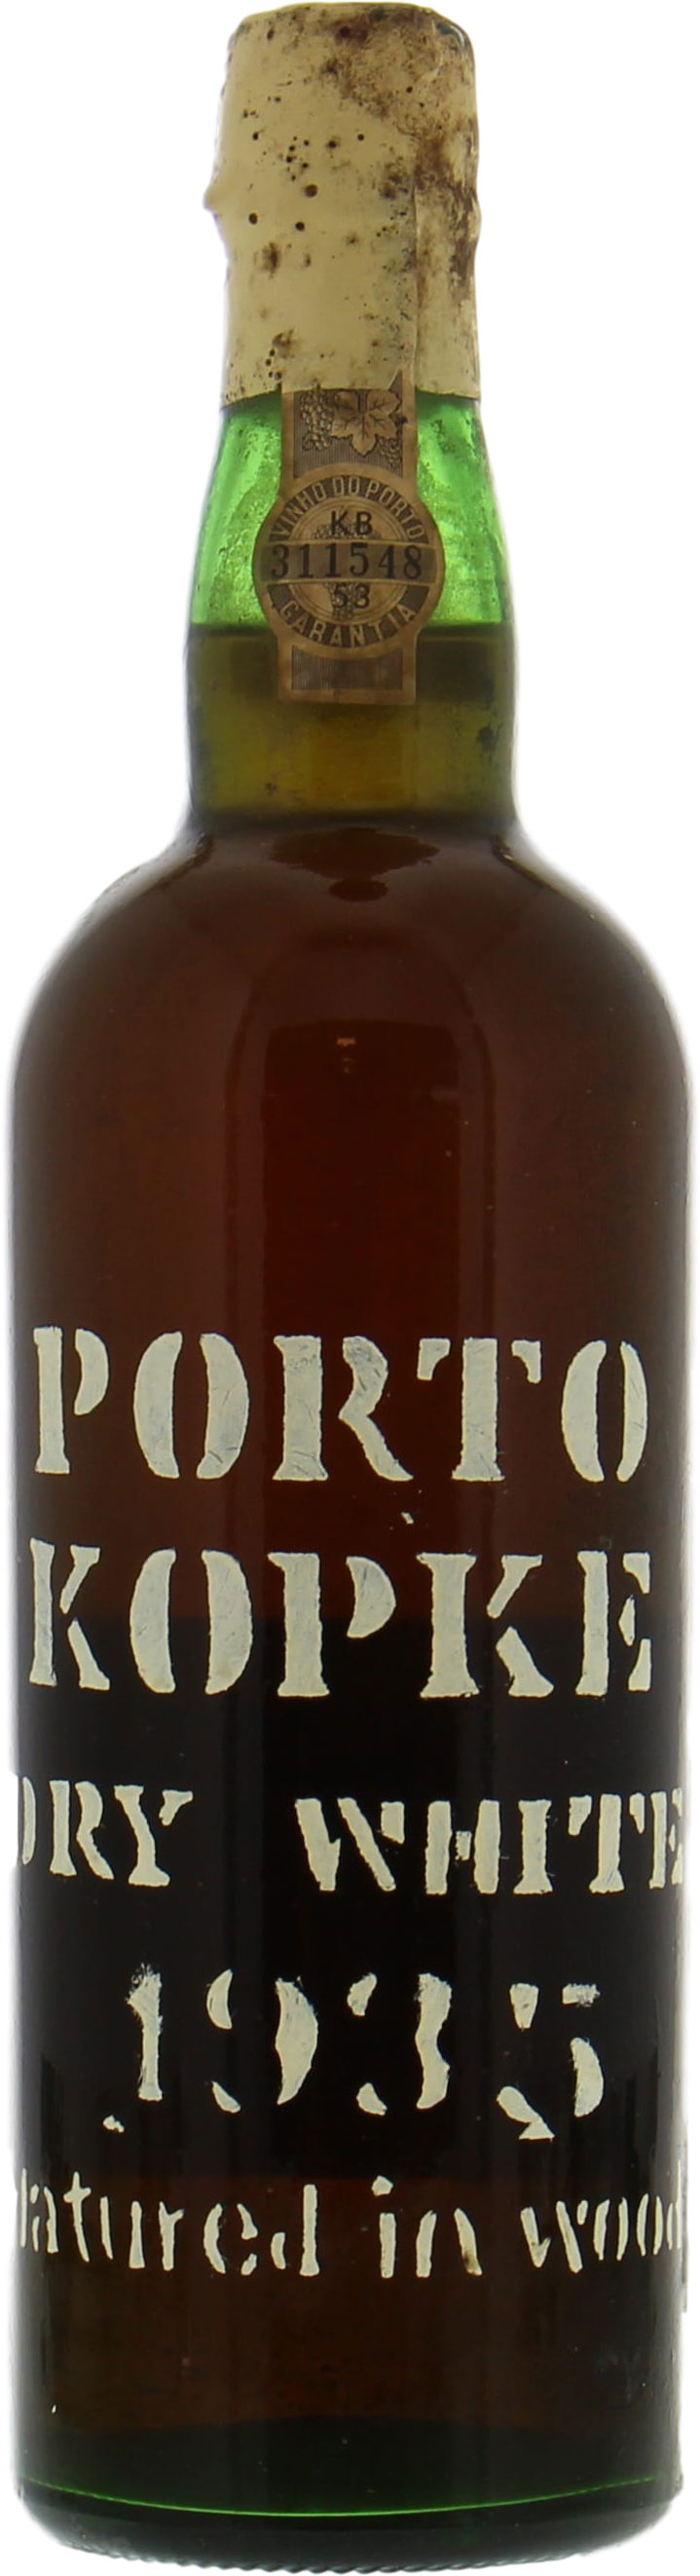 Kopke - White Colheita 1935 Perfect